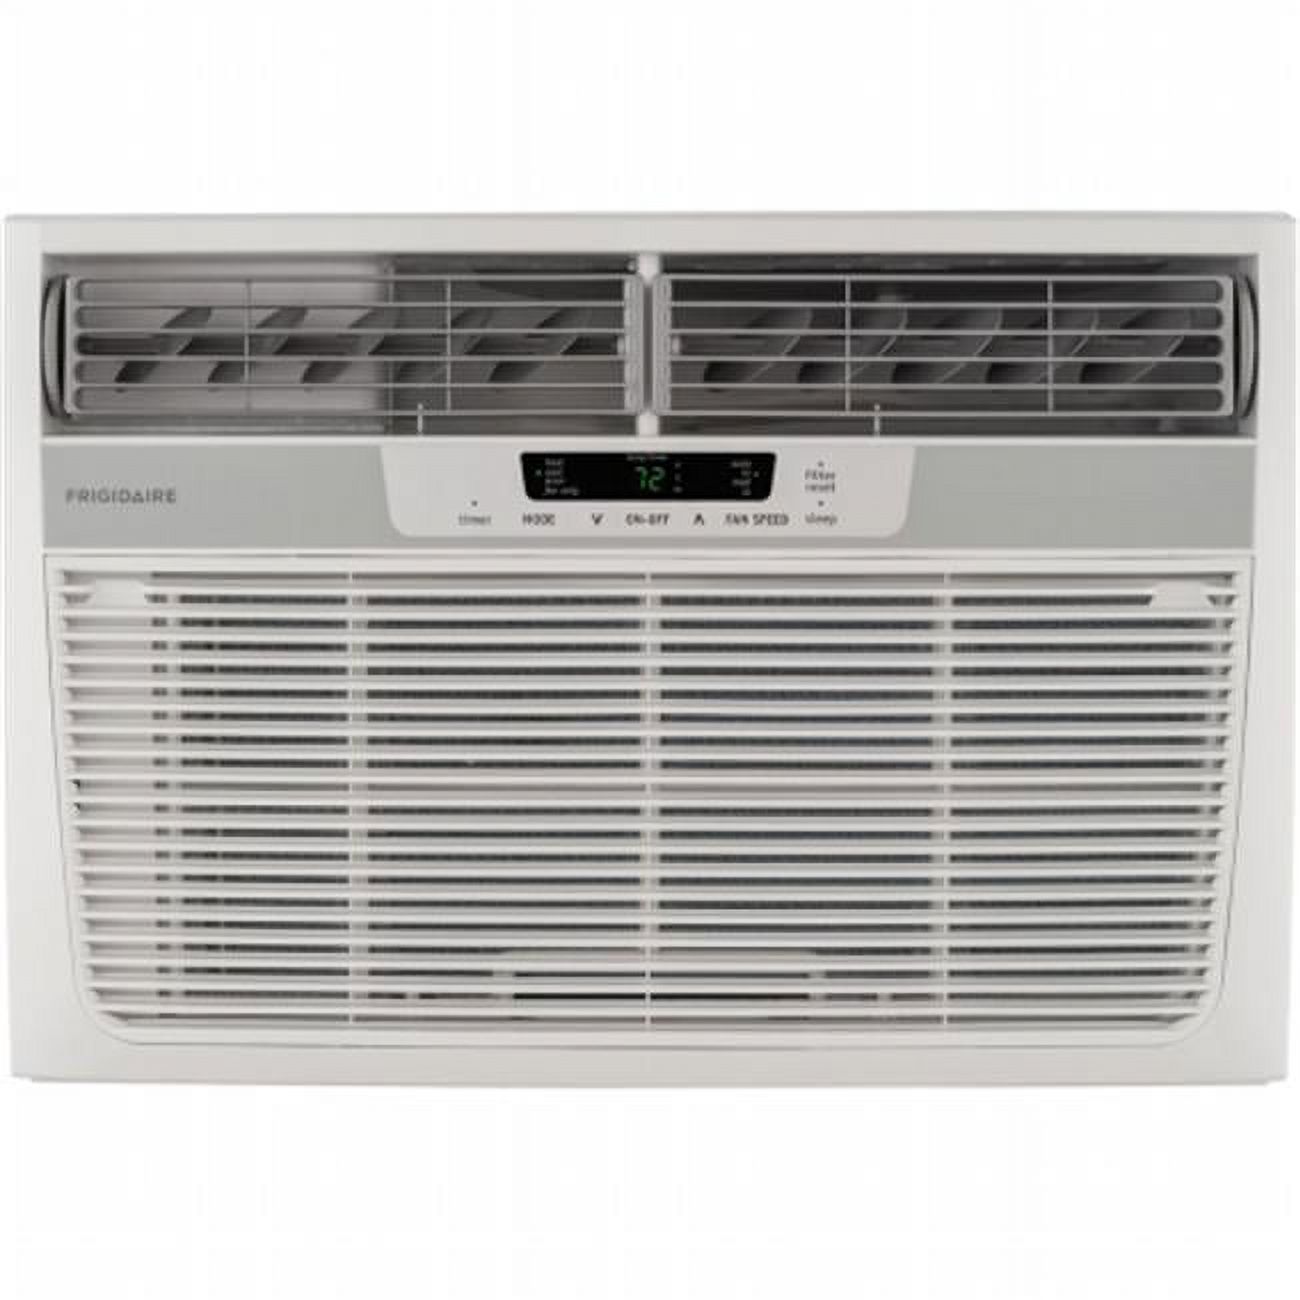 Frigidaire 8,000 BTU Heat/Cool Window Air Conditioner - image 1 of 8